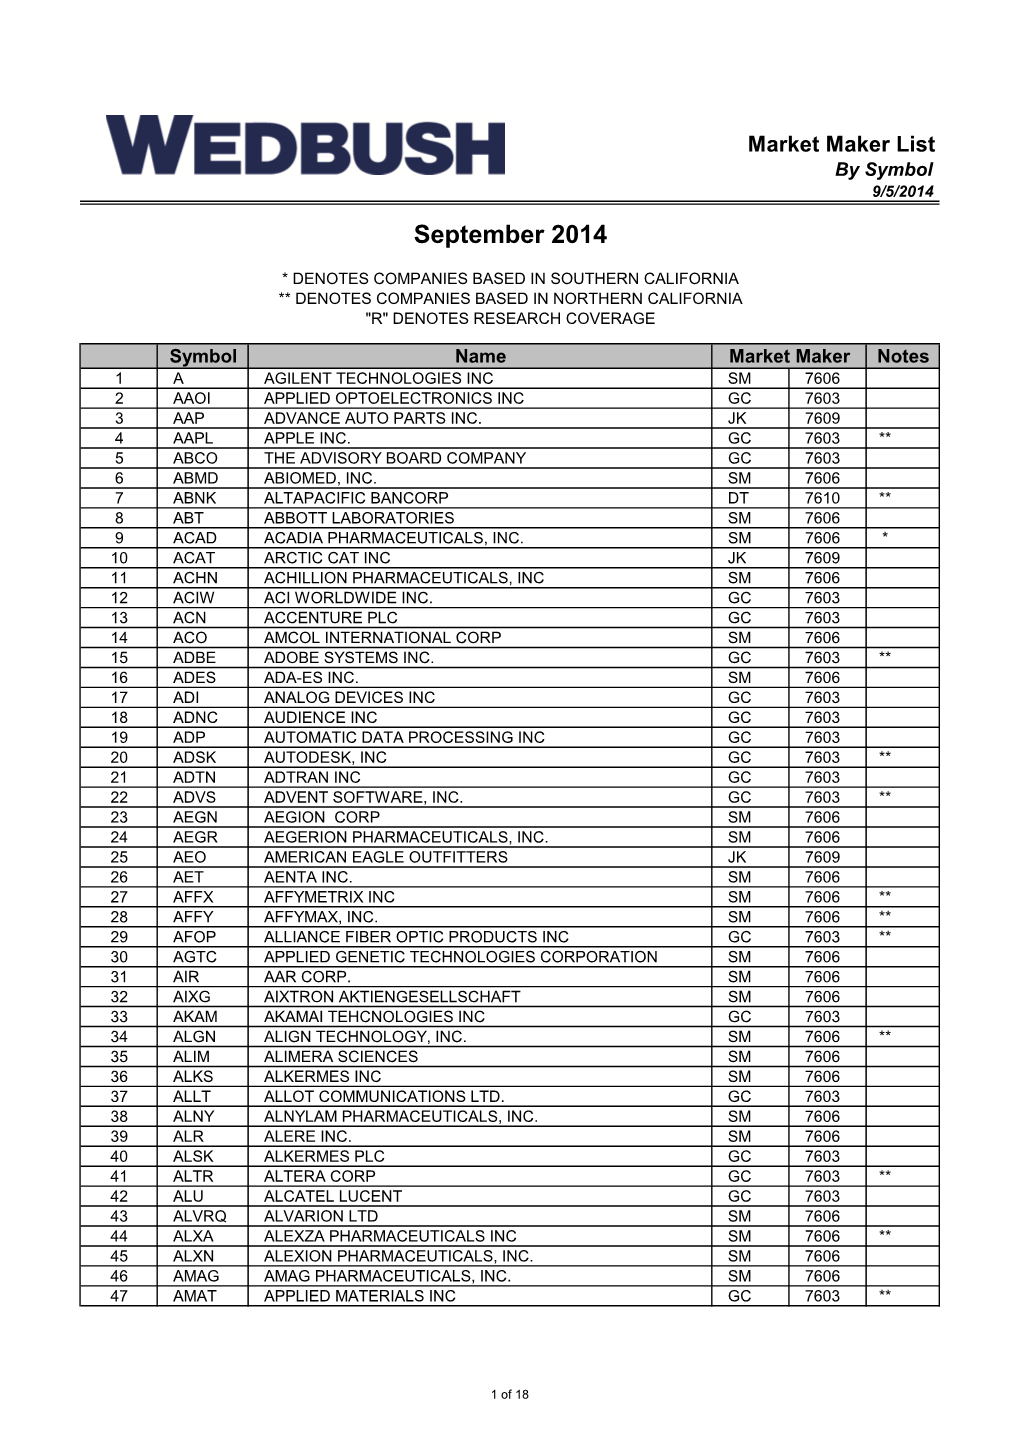 Market Maker List by Symbol 9/5/2014 September 2014